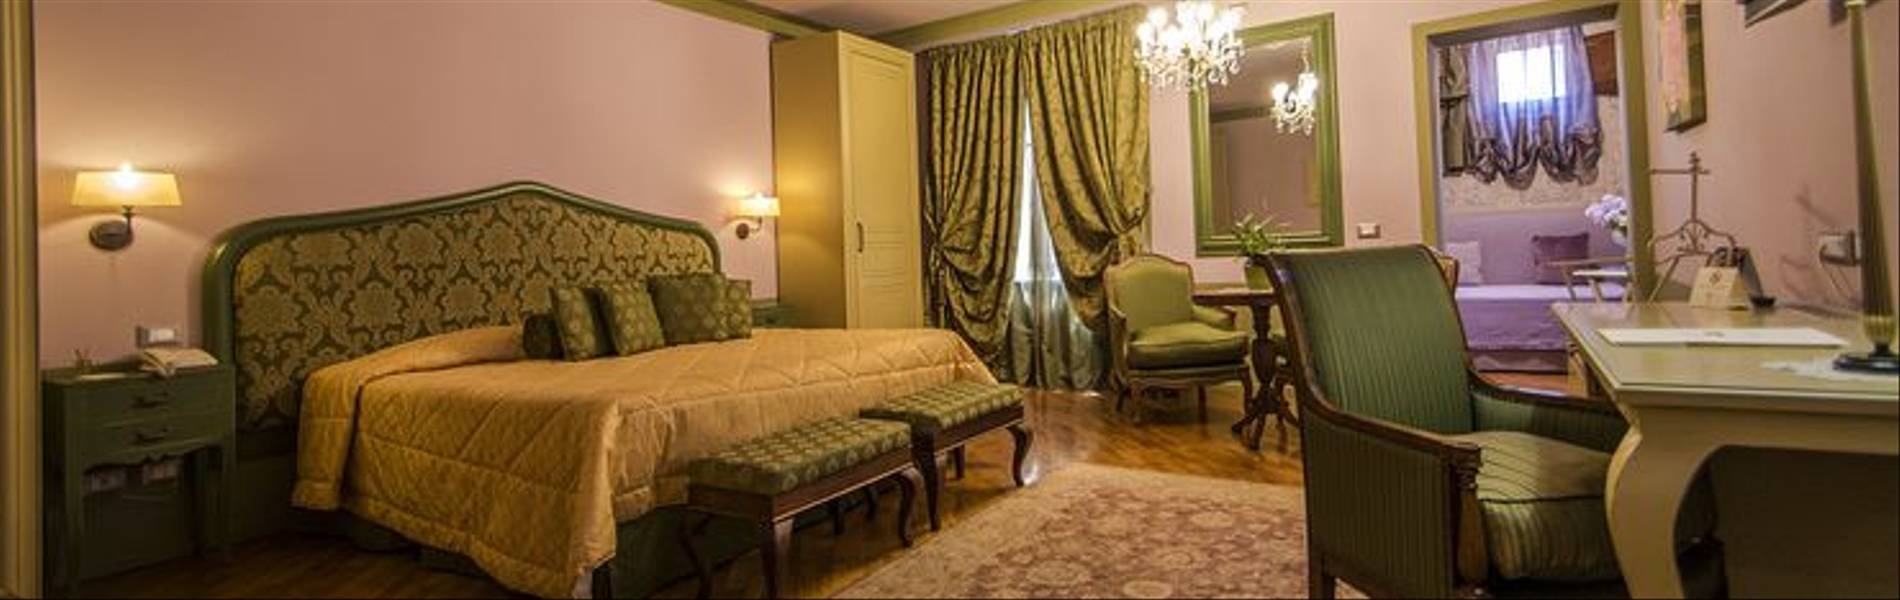 07-Hotel San Luca Palace.jpeg